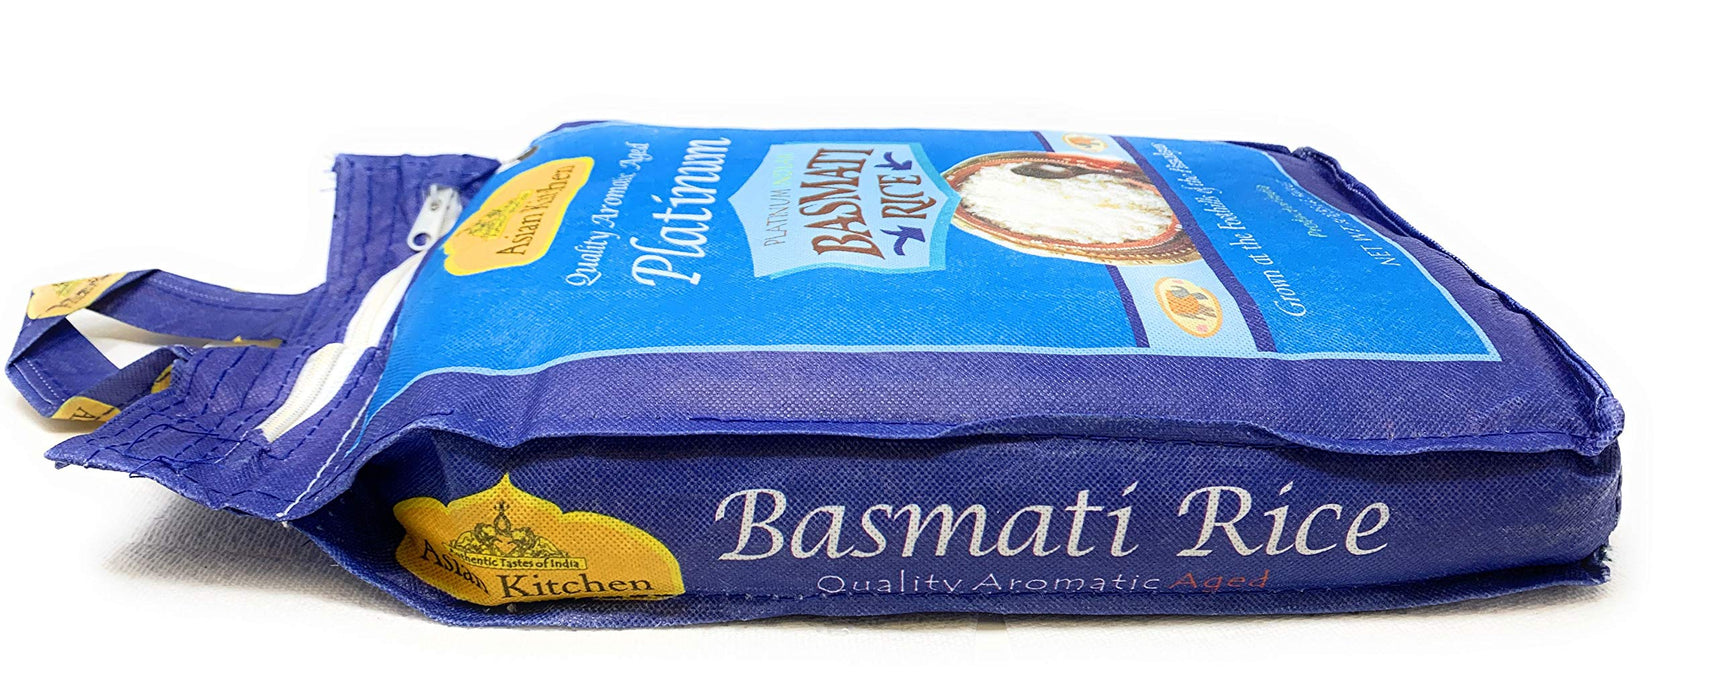 Asian Kitchen Platinum White Basmati Rice Extra Long Aged 10lbs (4.54kg) ~ All Natural | Vegan | Gluten Friendly | Indian Origin